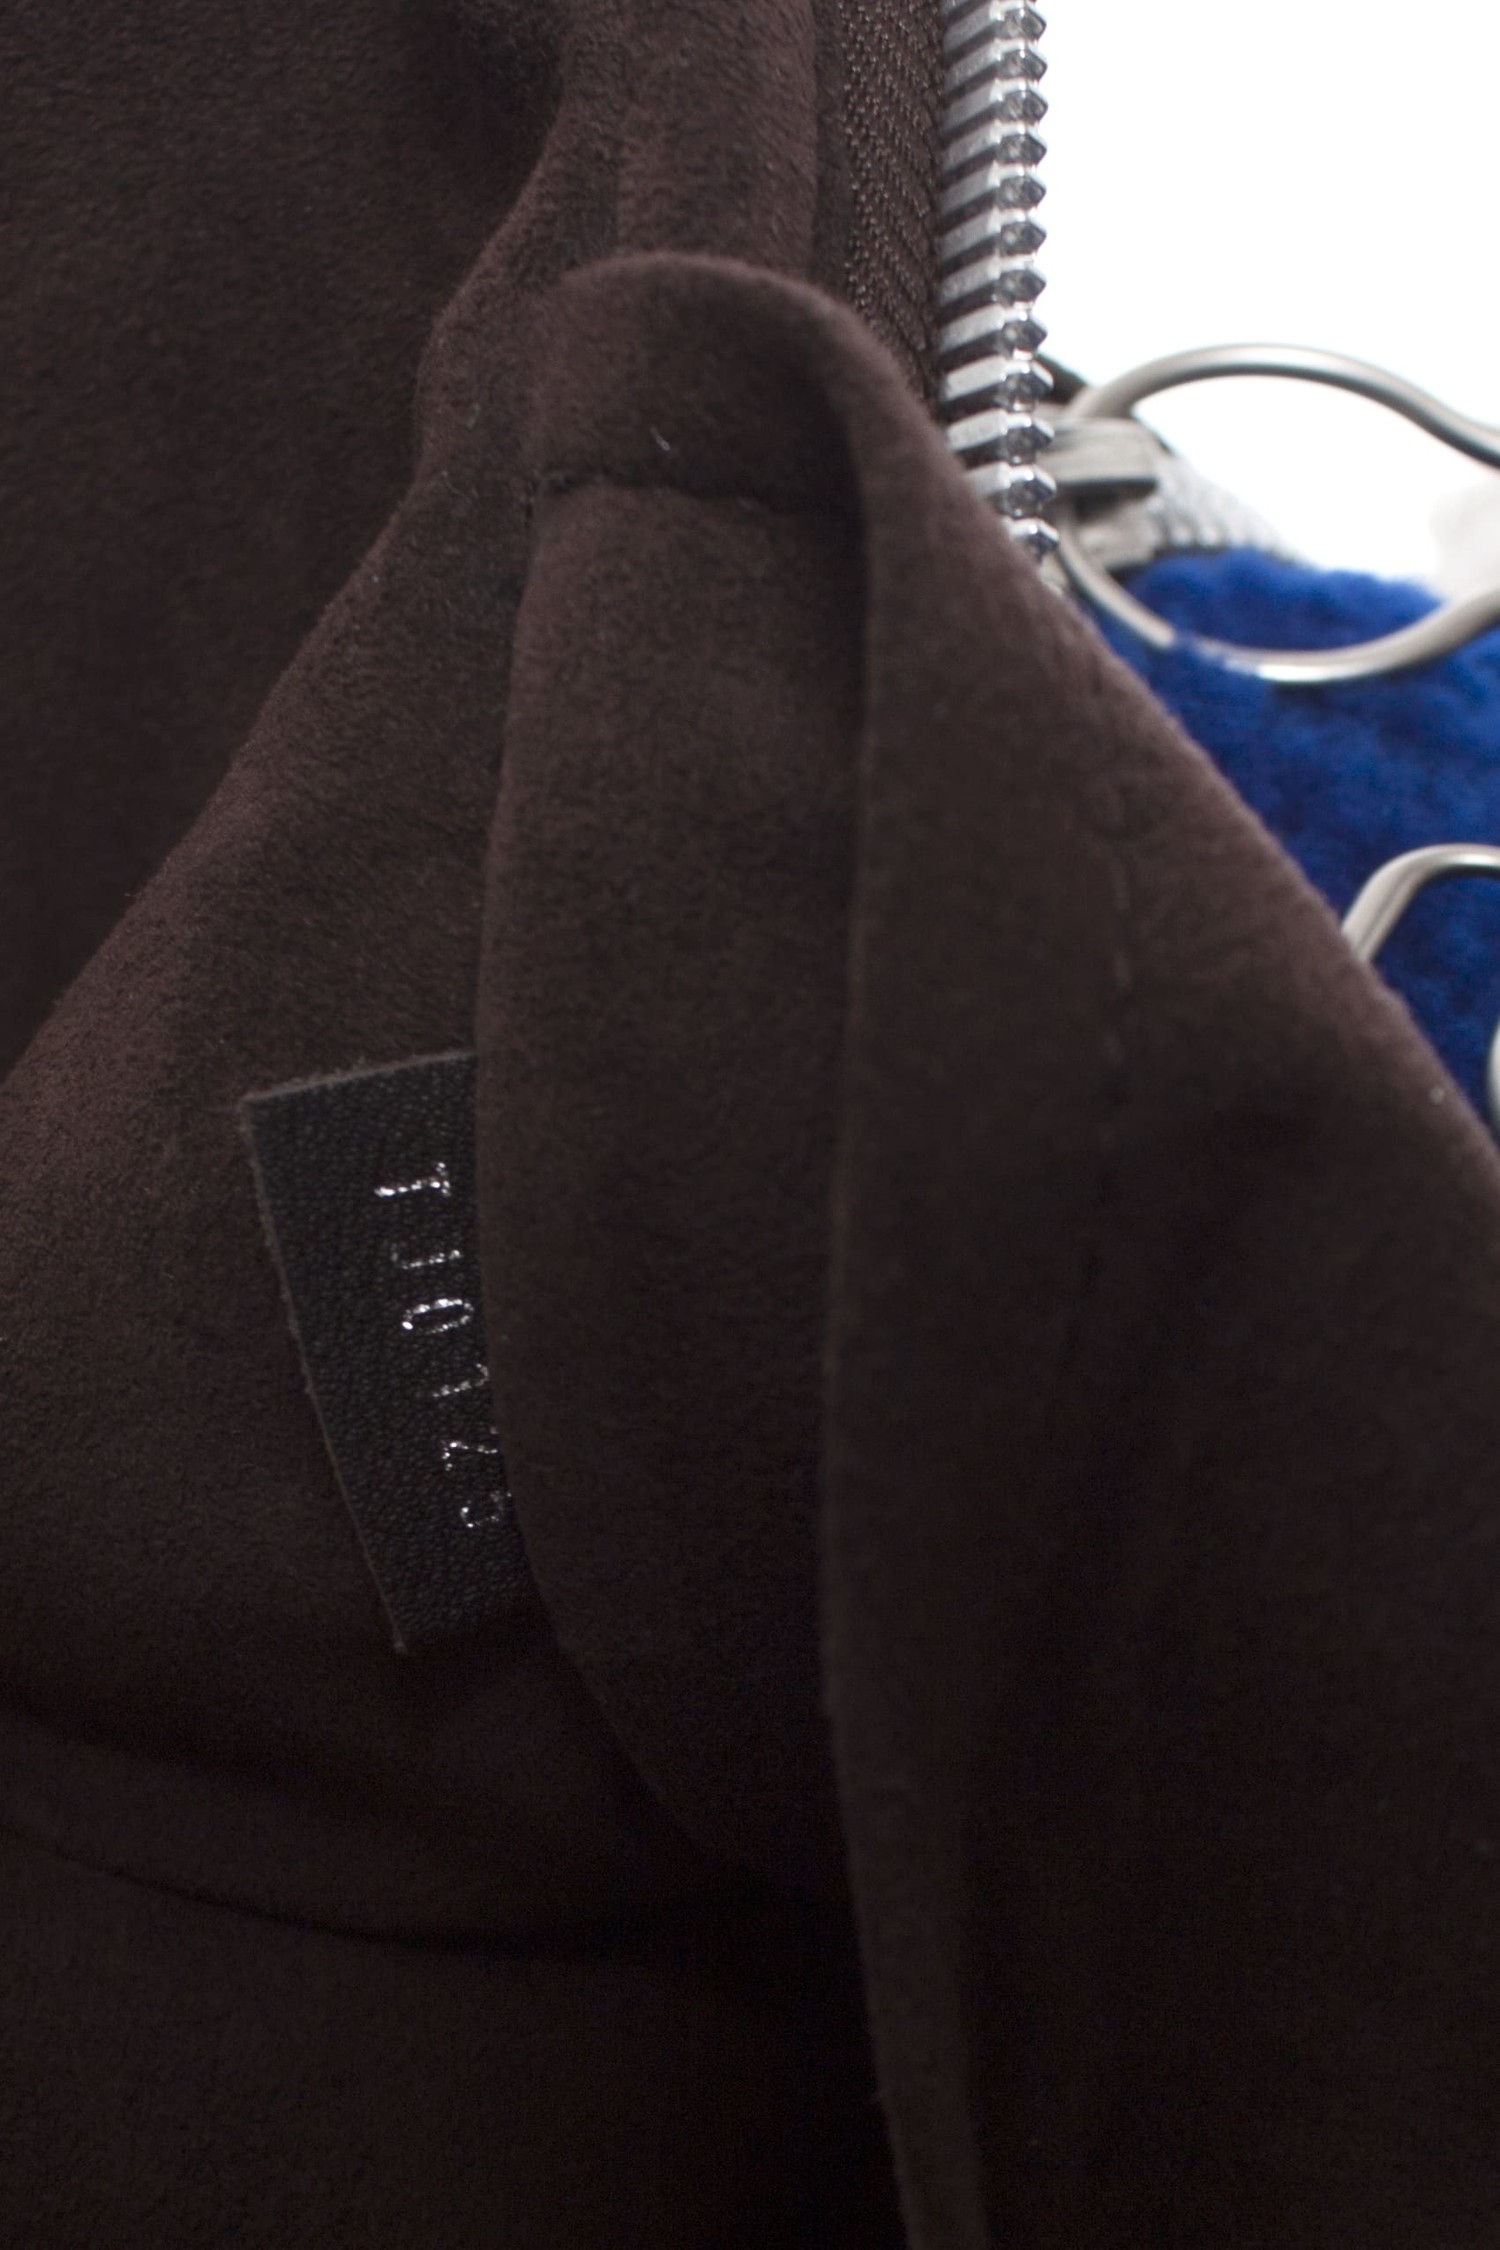 Louis-Vuitton-Marc-Newson-Fleece-Backpack-Orange – MADE IN MILANO